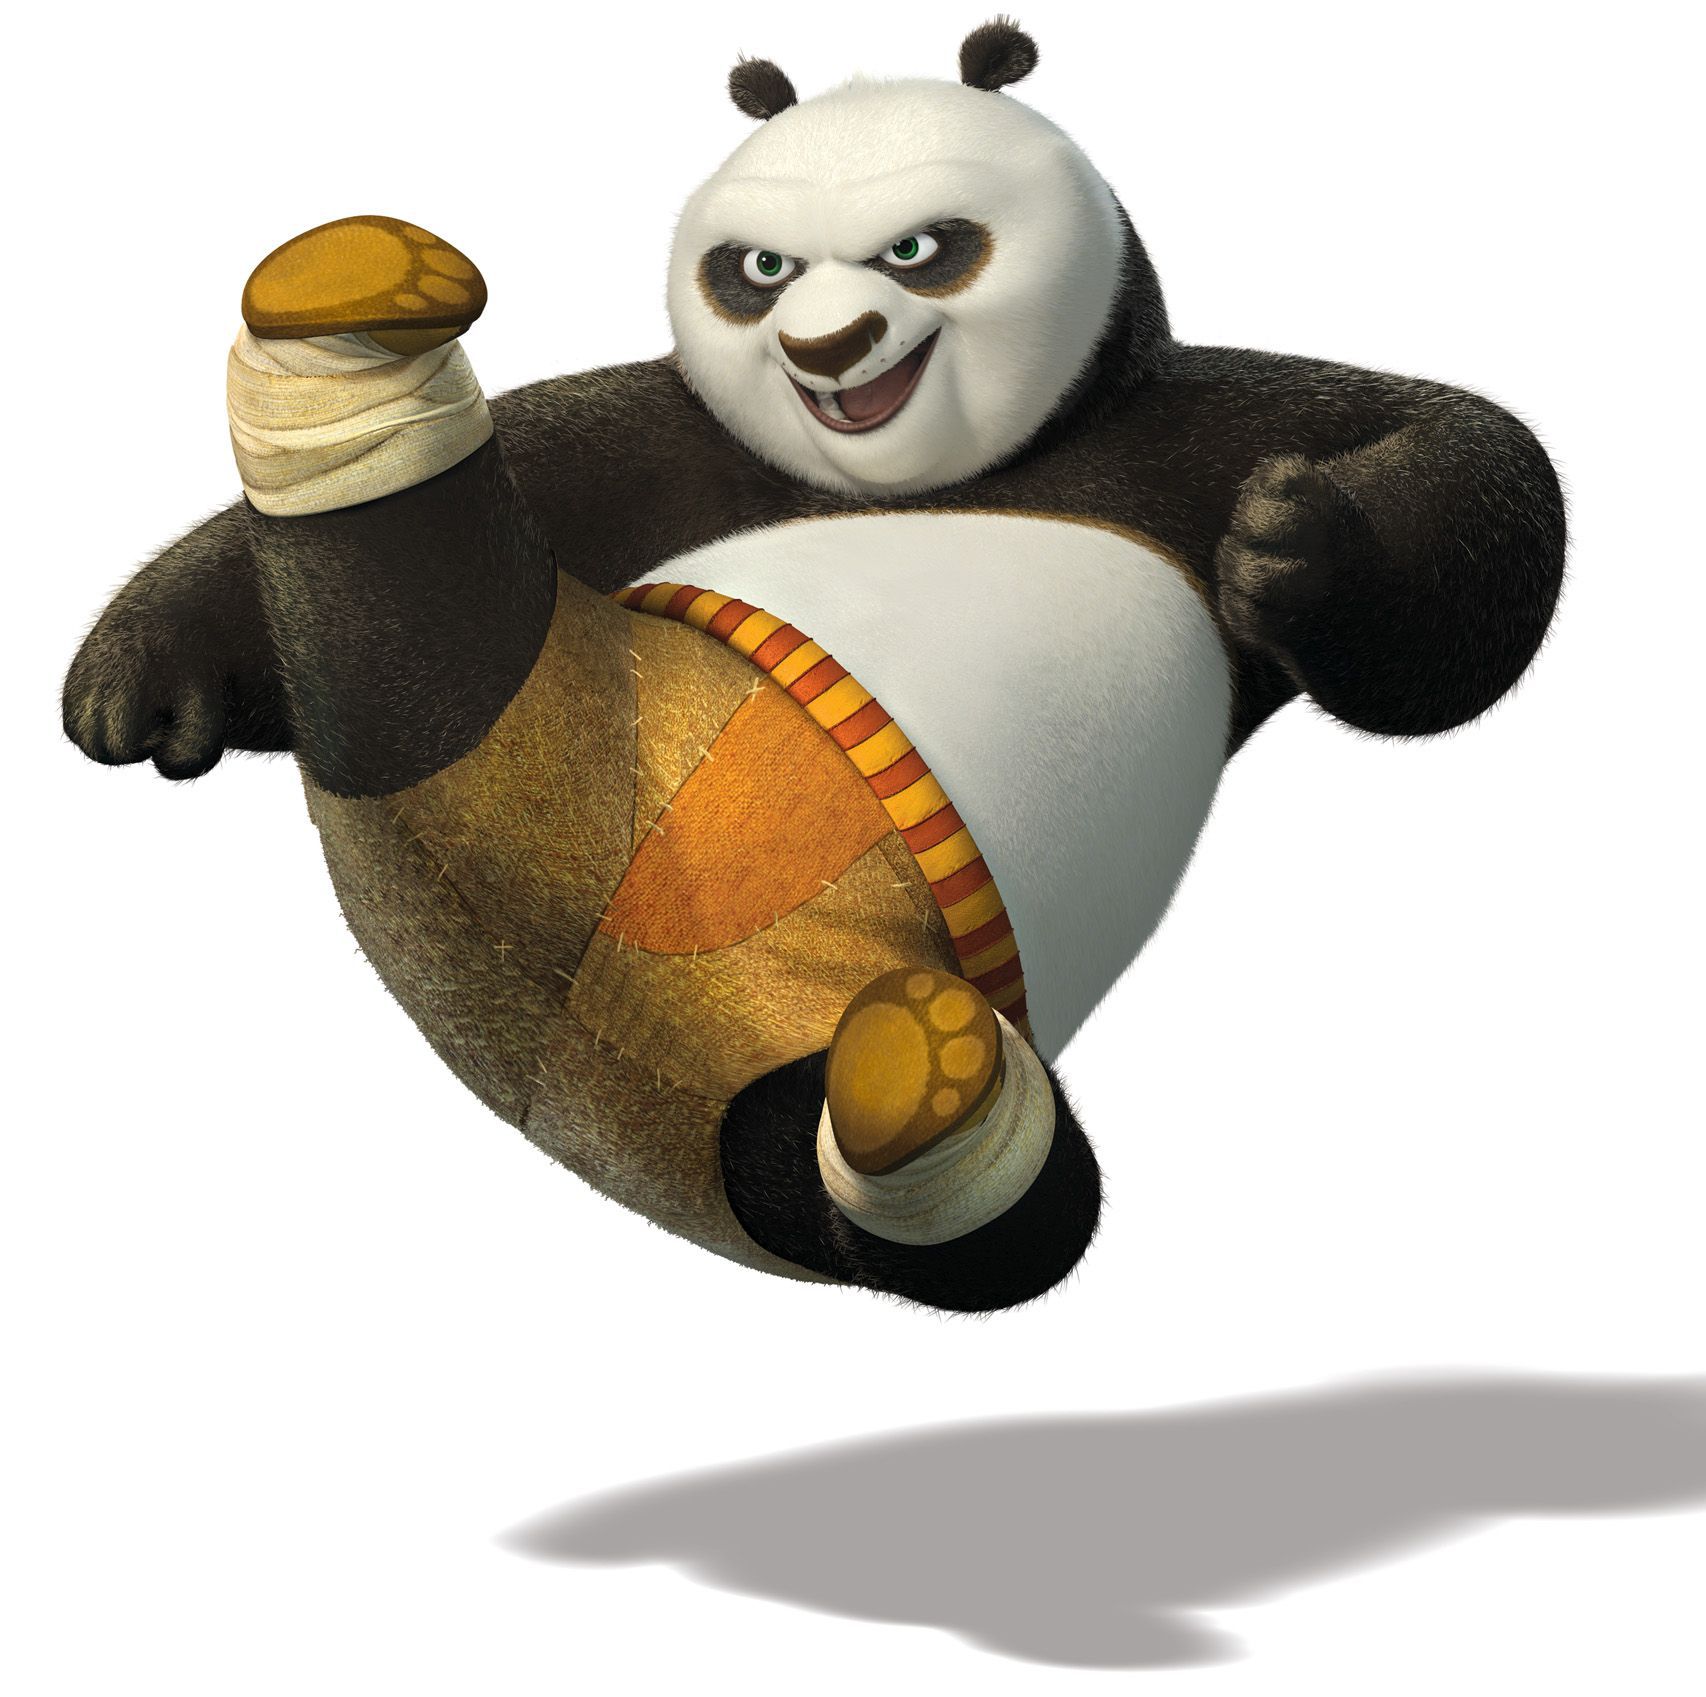 Kung Fu Panda Wallpaper Image for Tablet - Cartoons Wallpapers